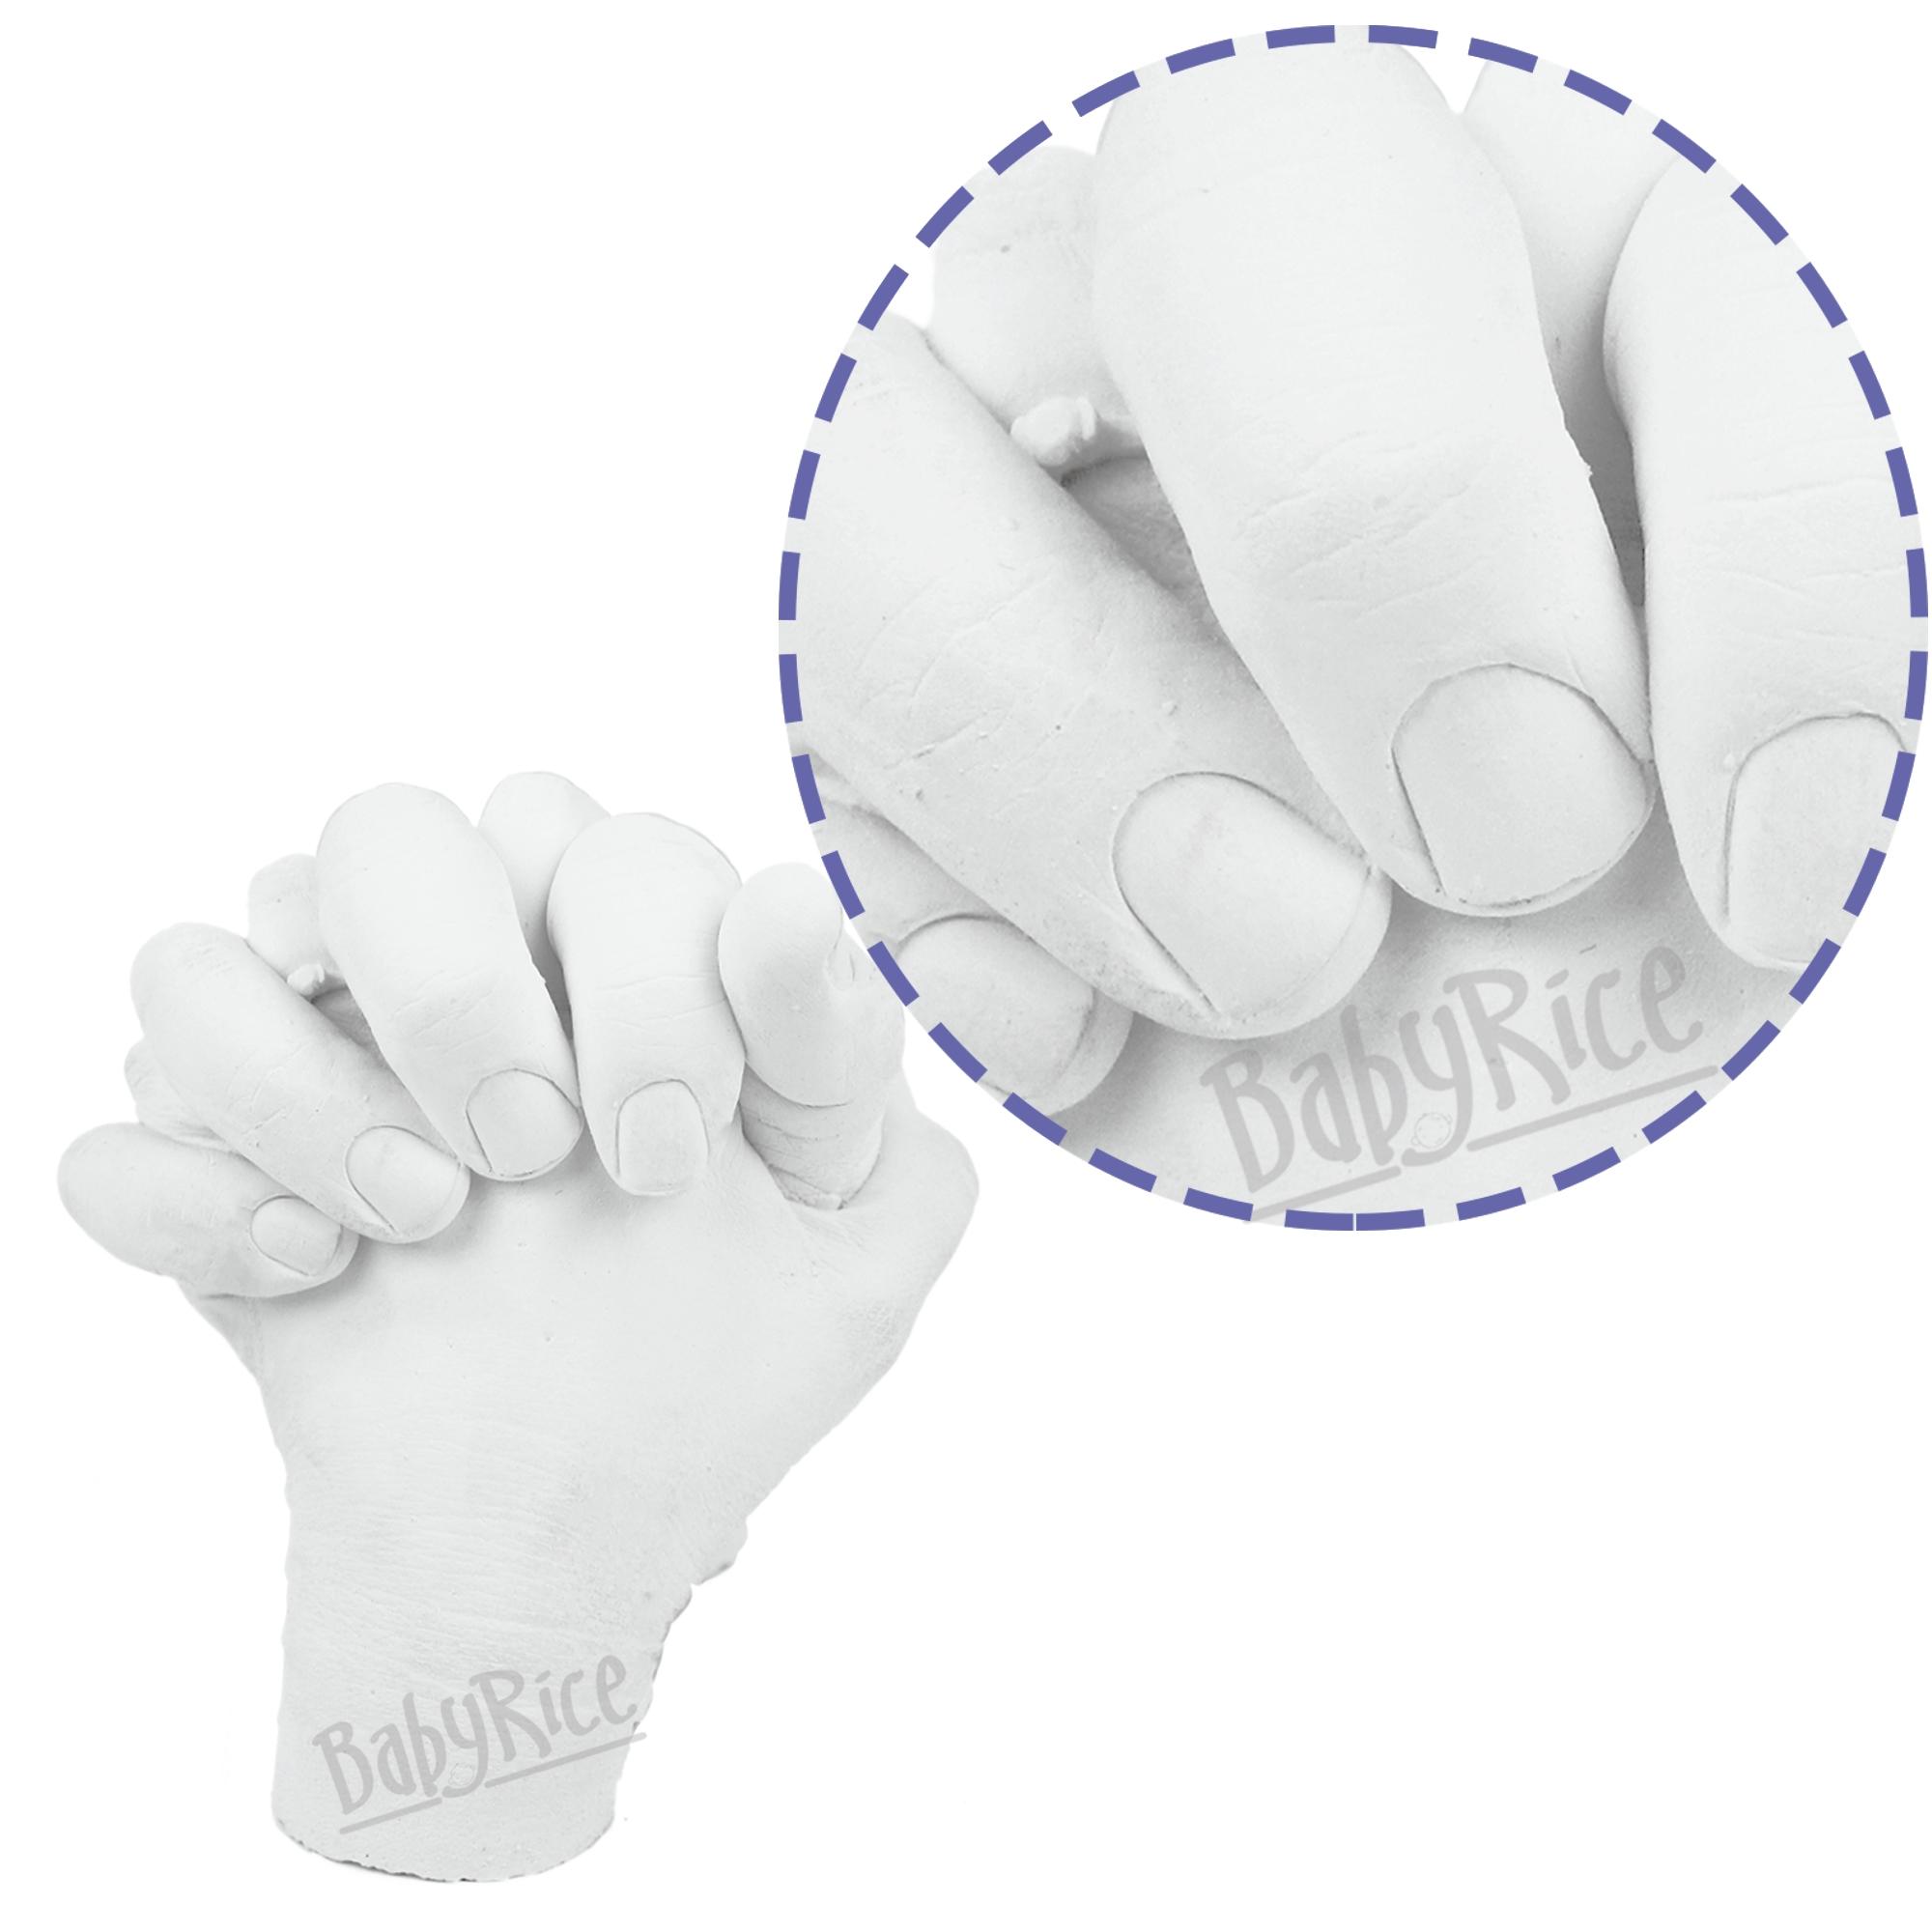 White plaster hand casts